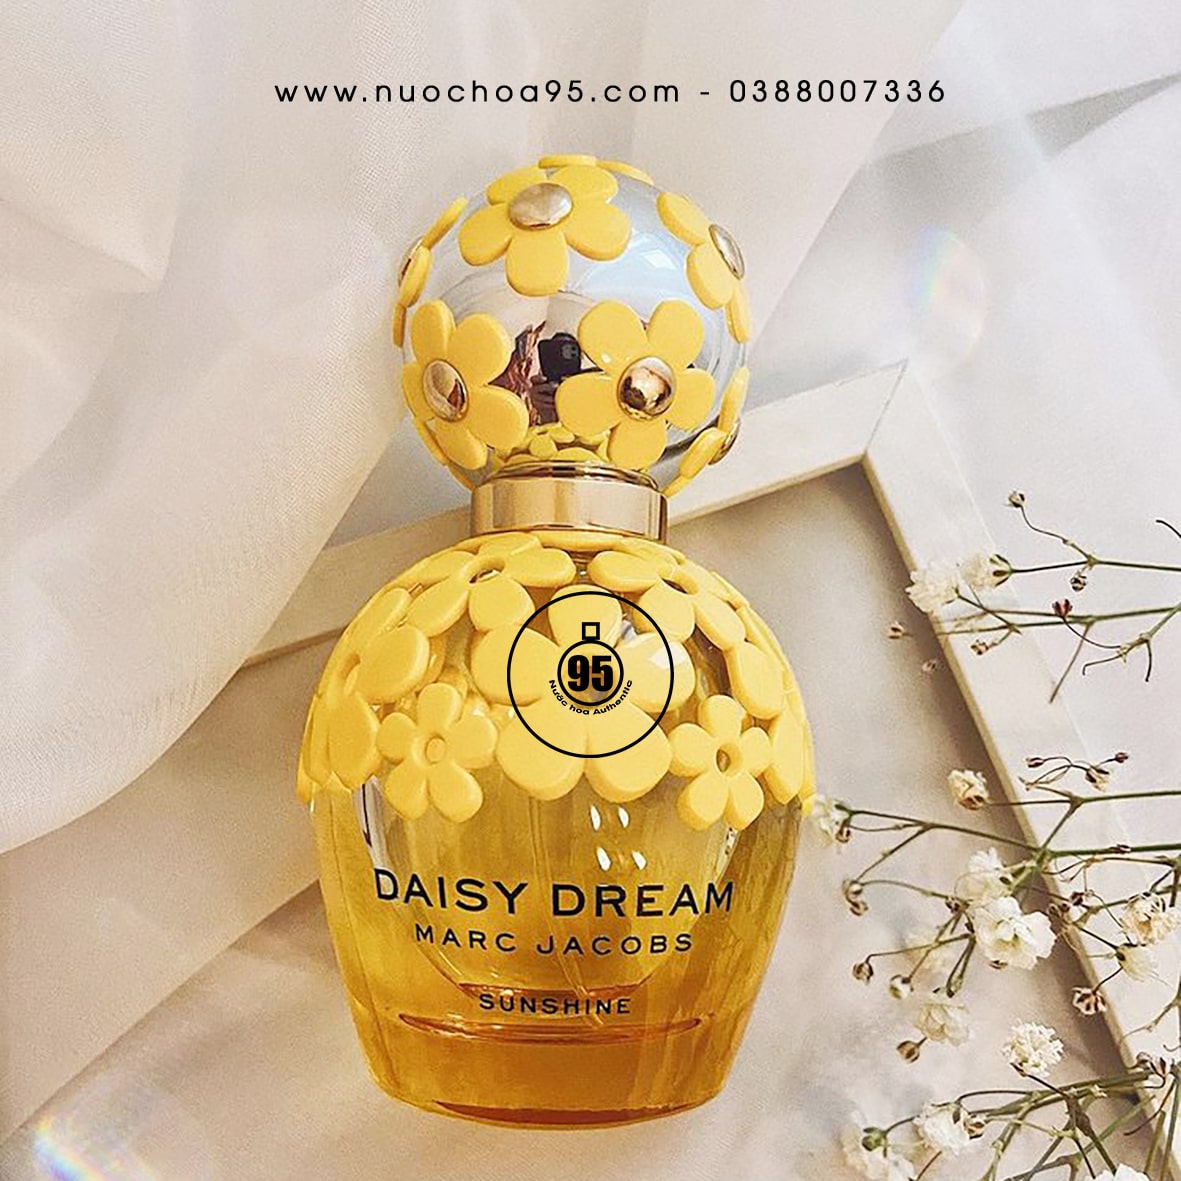 Nước hoa Marc Jacobs Daisy Dream Sunshine - Ảnh 2